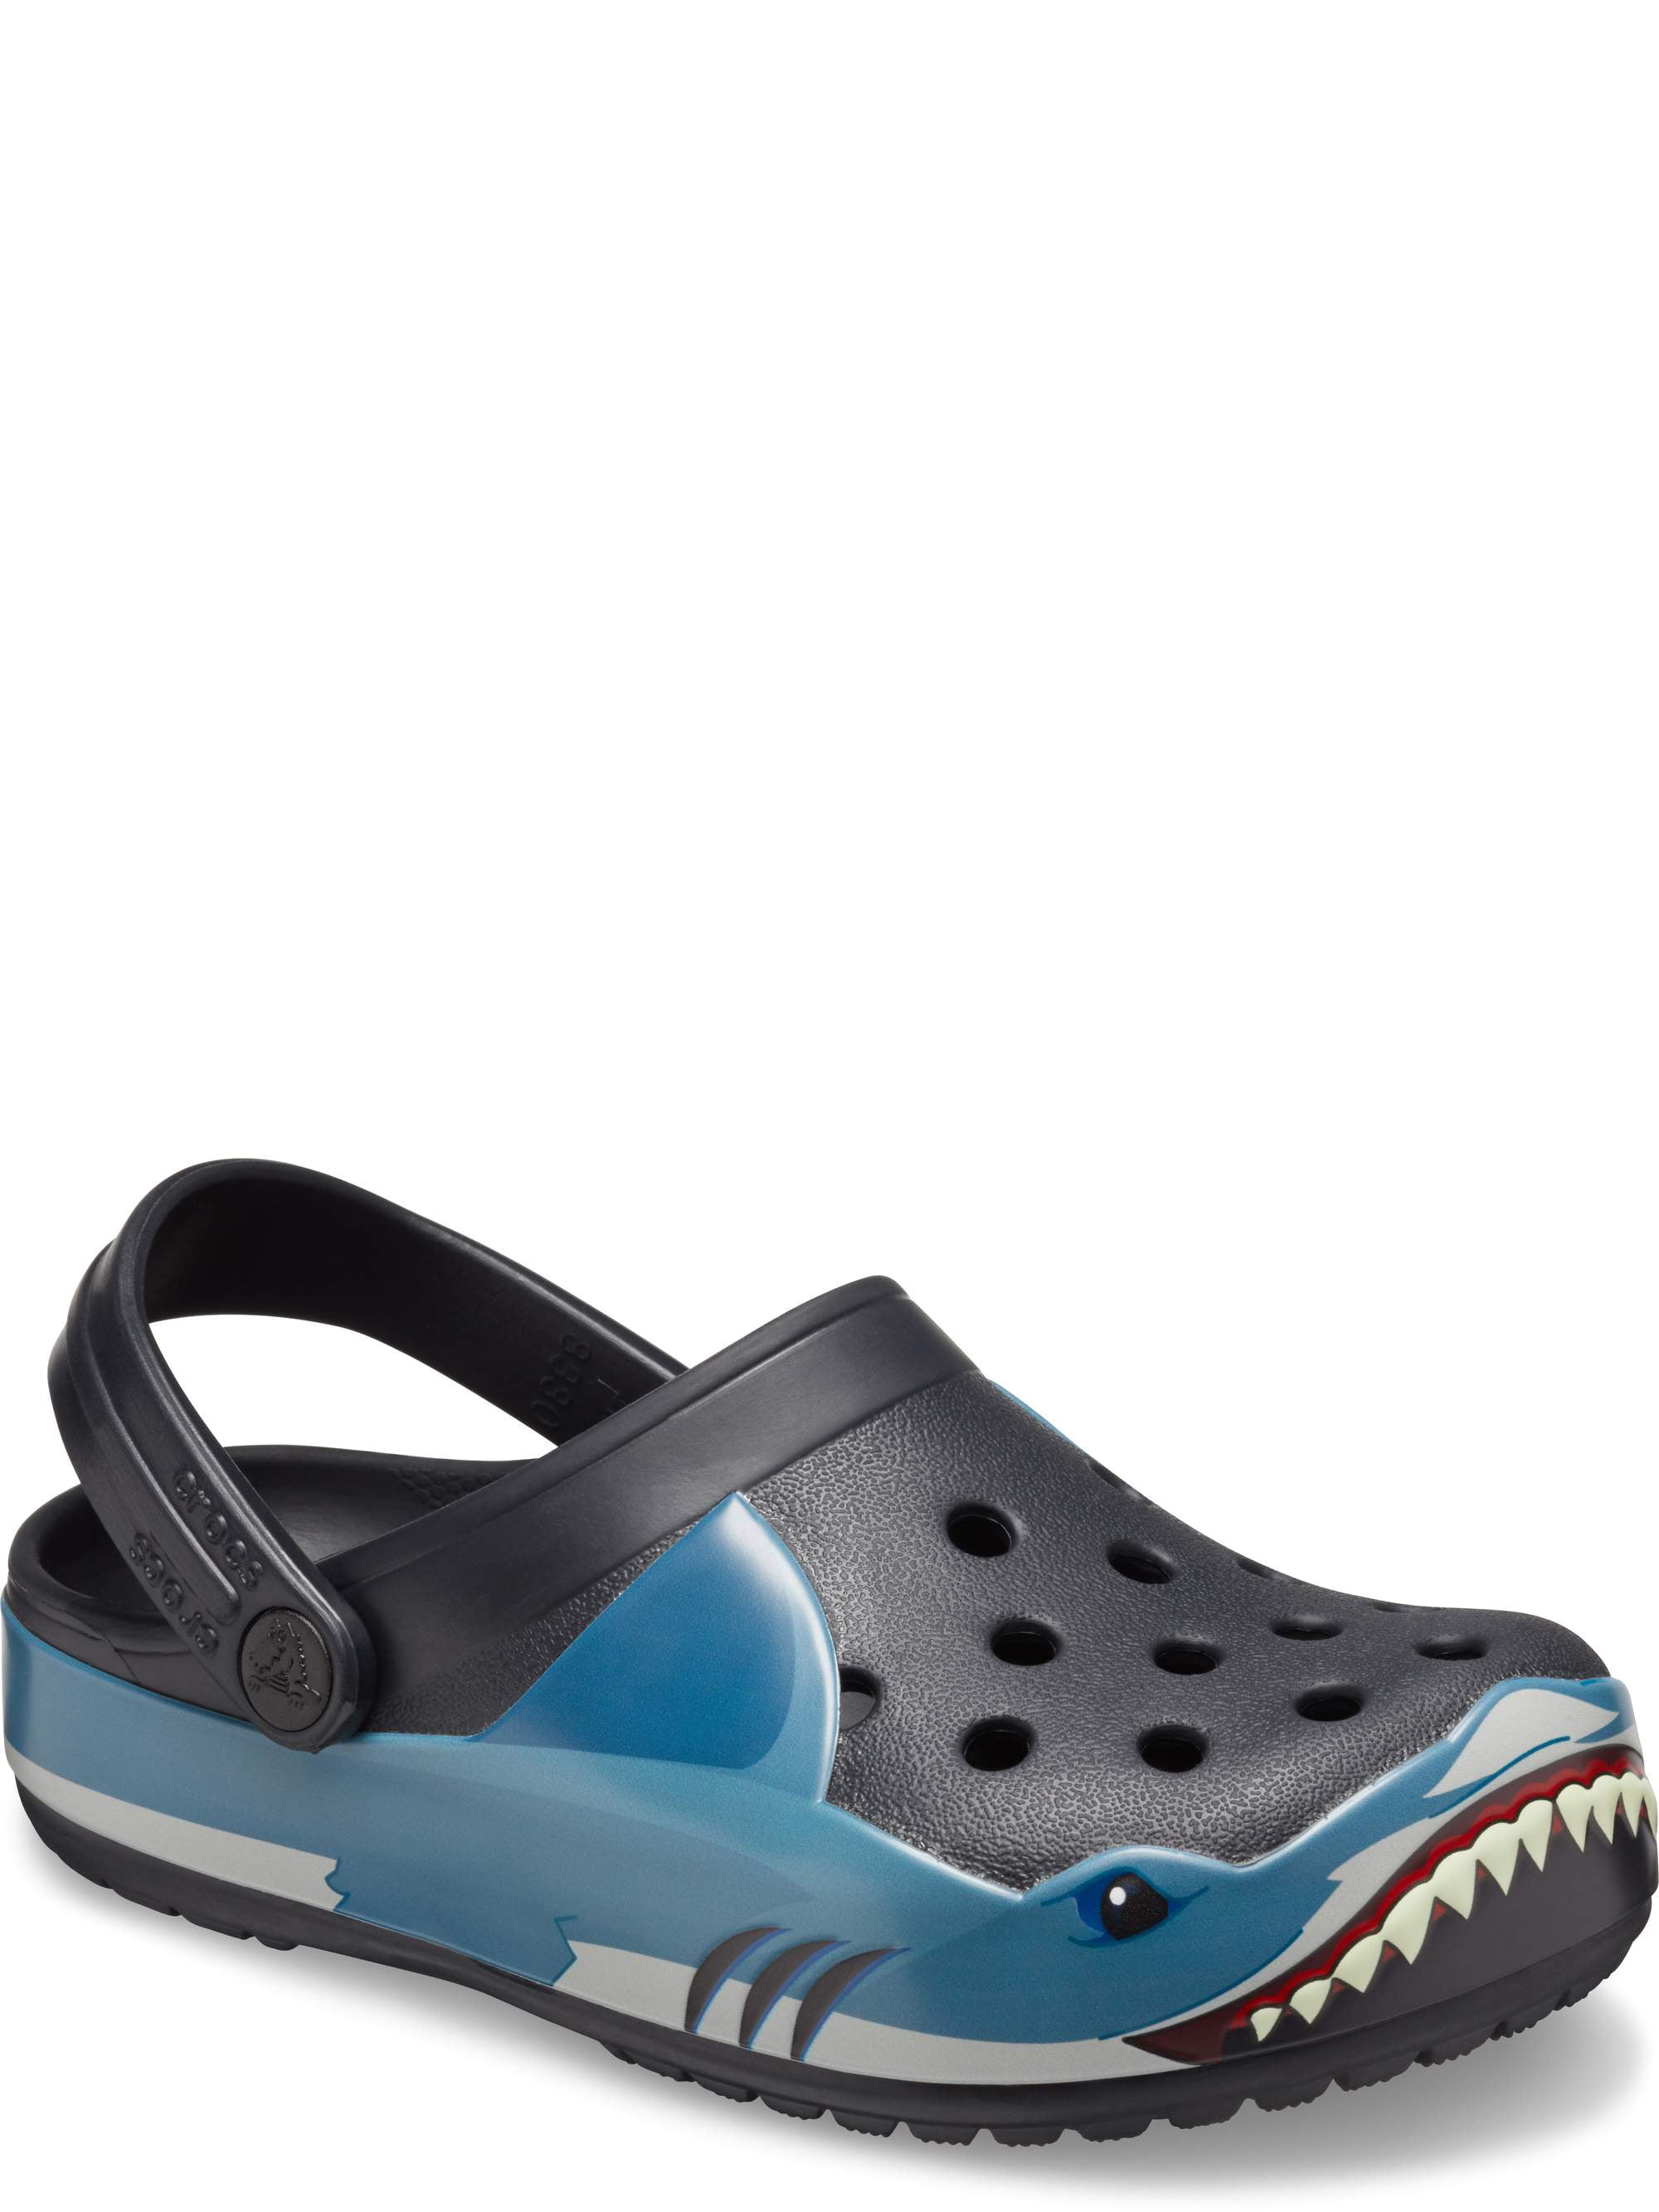 croc shark shoes